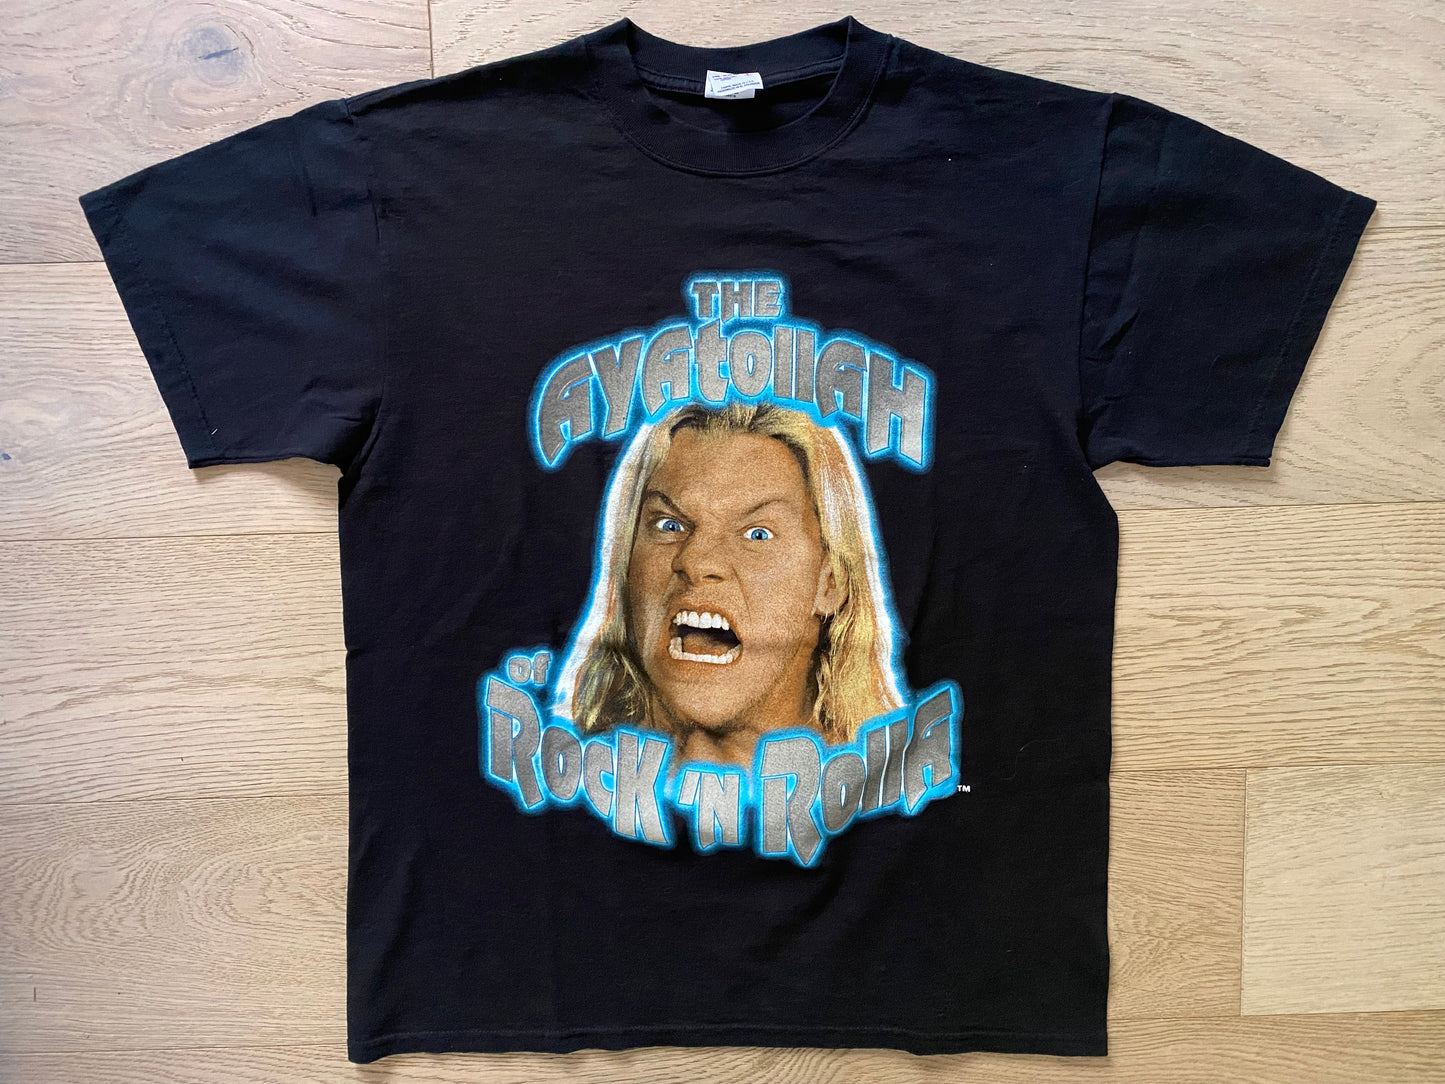 2000 WWF Y2J Chris Jericho “The Ayatollah of Rock N Rolla” shirt